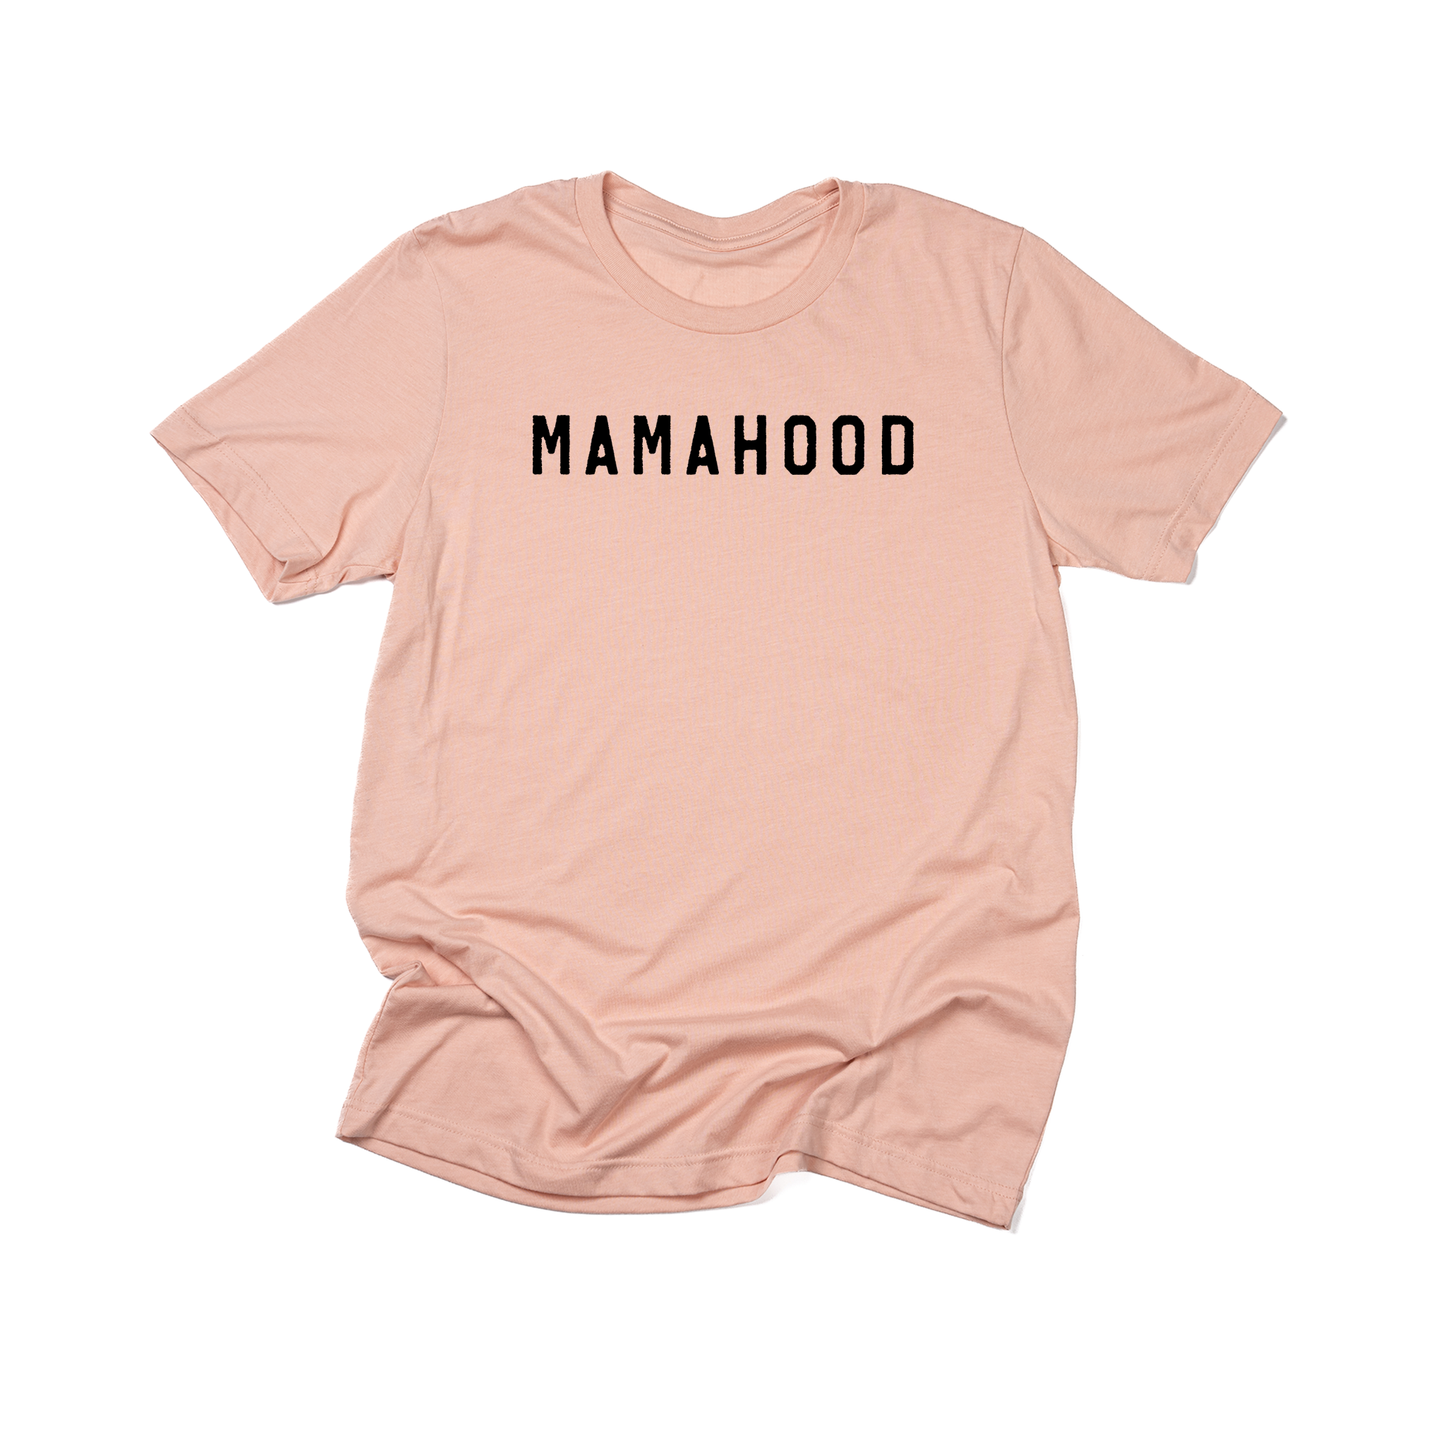 Mamahood (Rough) - Tee (Peach)